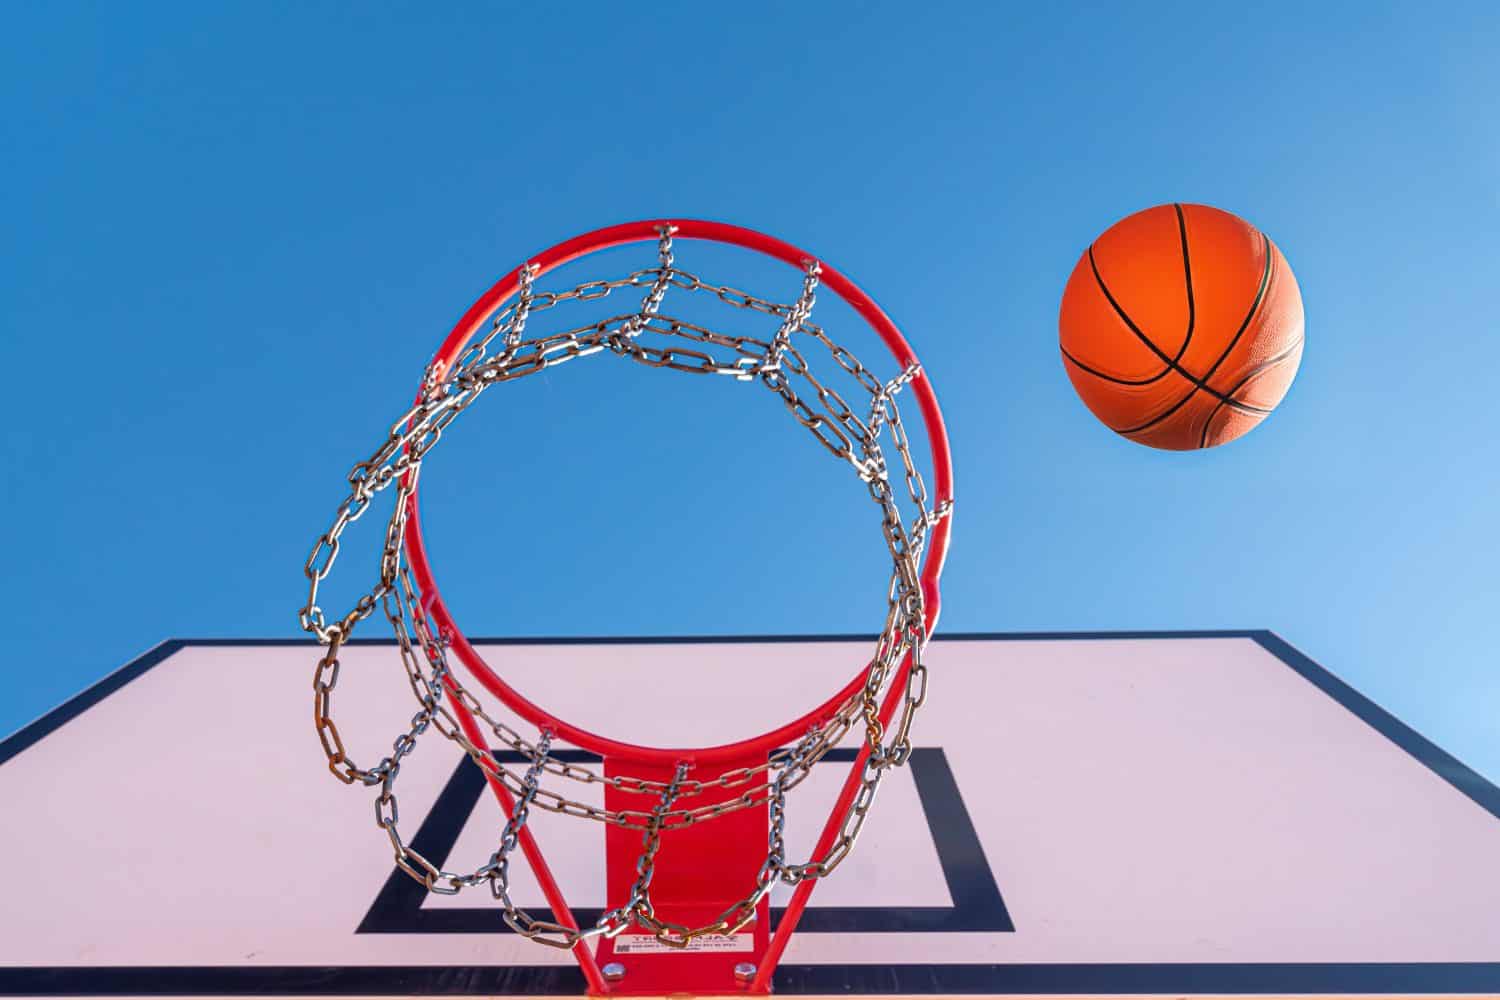 Used orange basketball with basket in background. Basketball street court stock photo